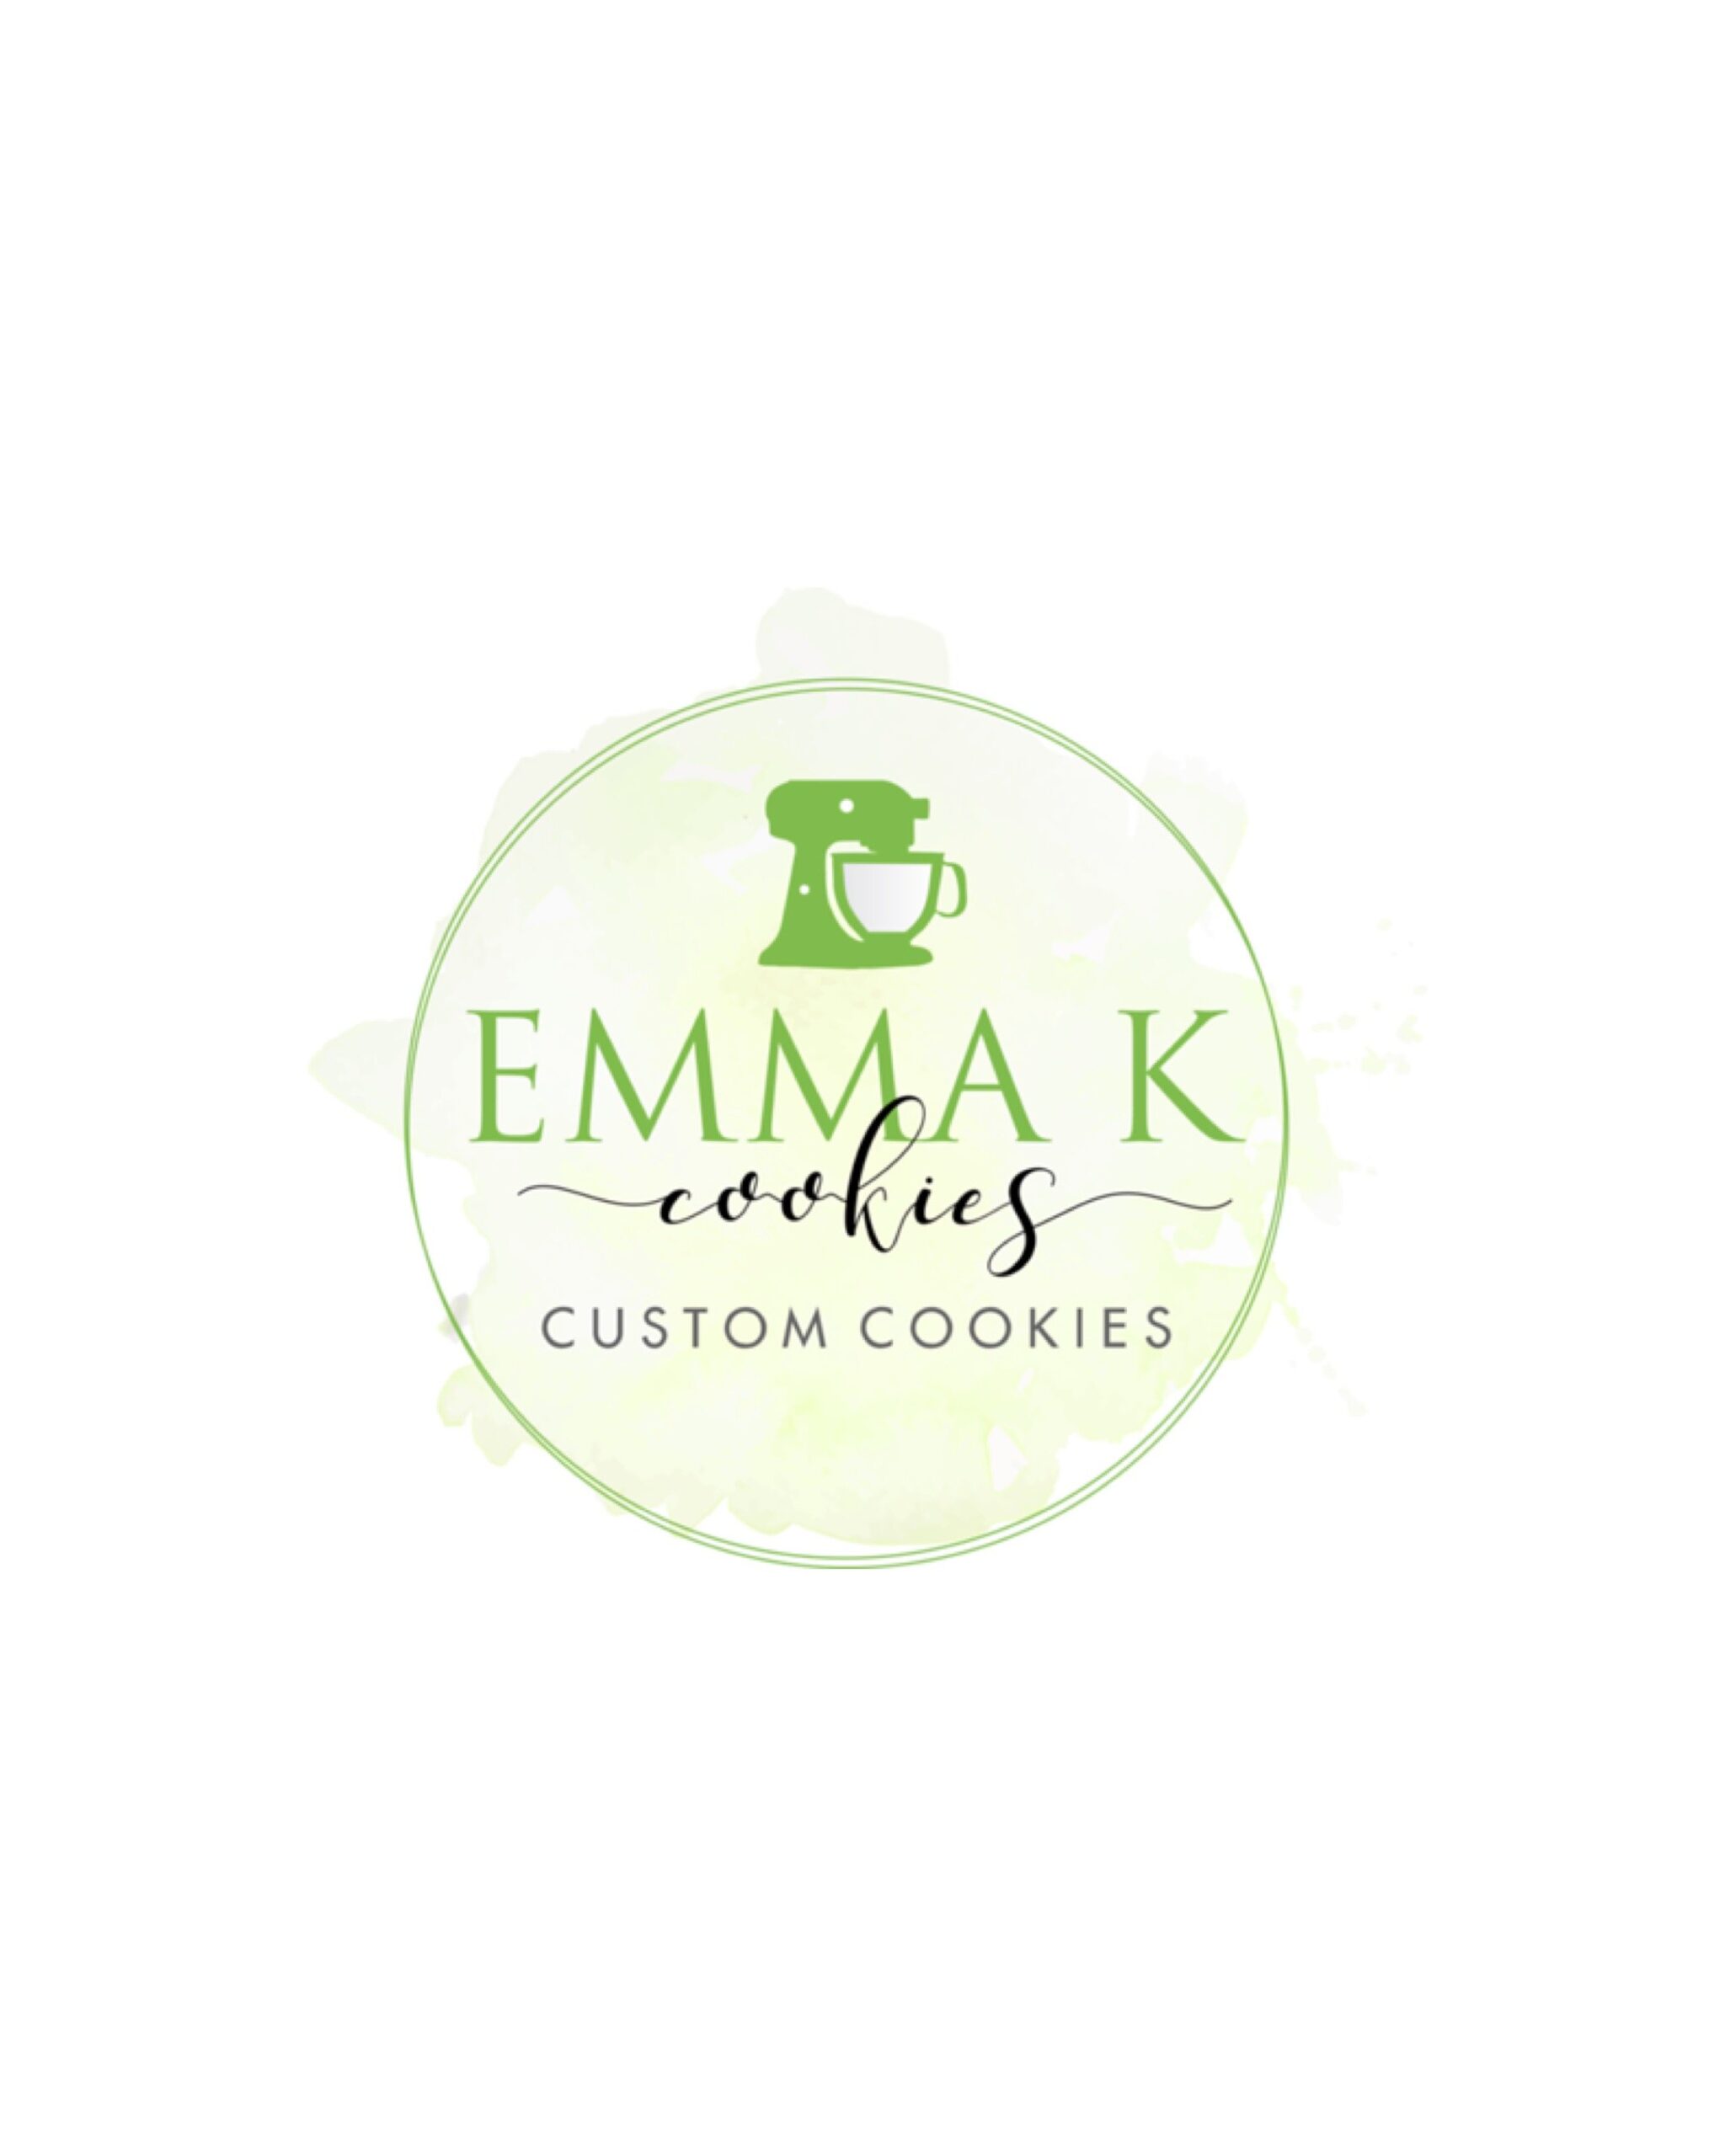 Emma K Cookies logo